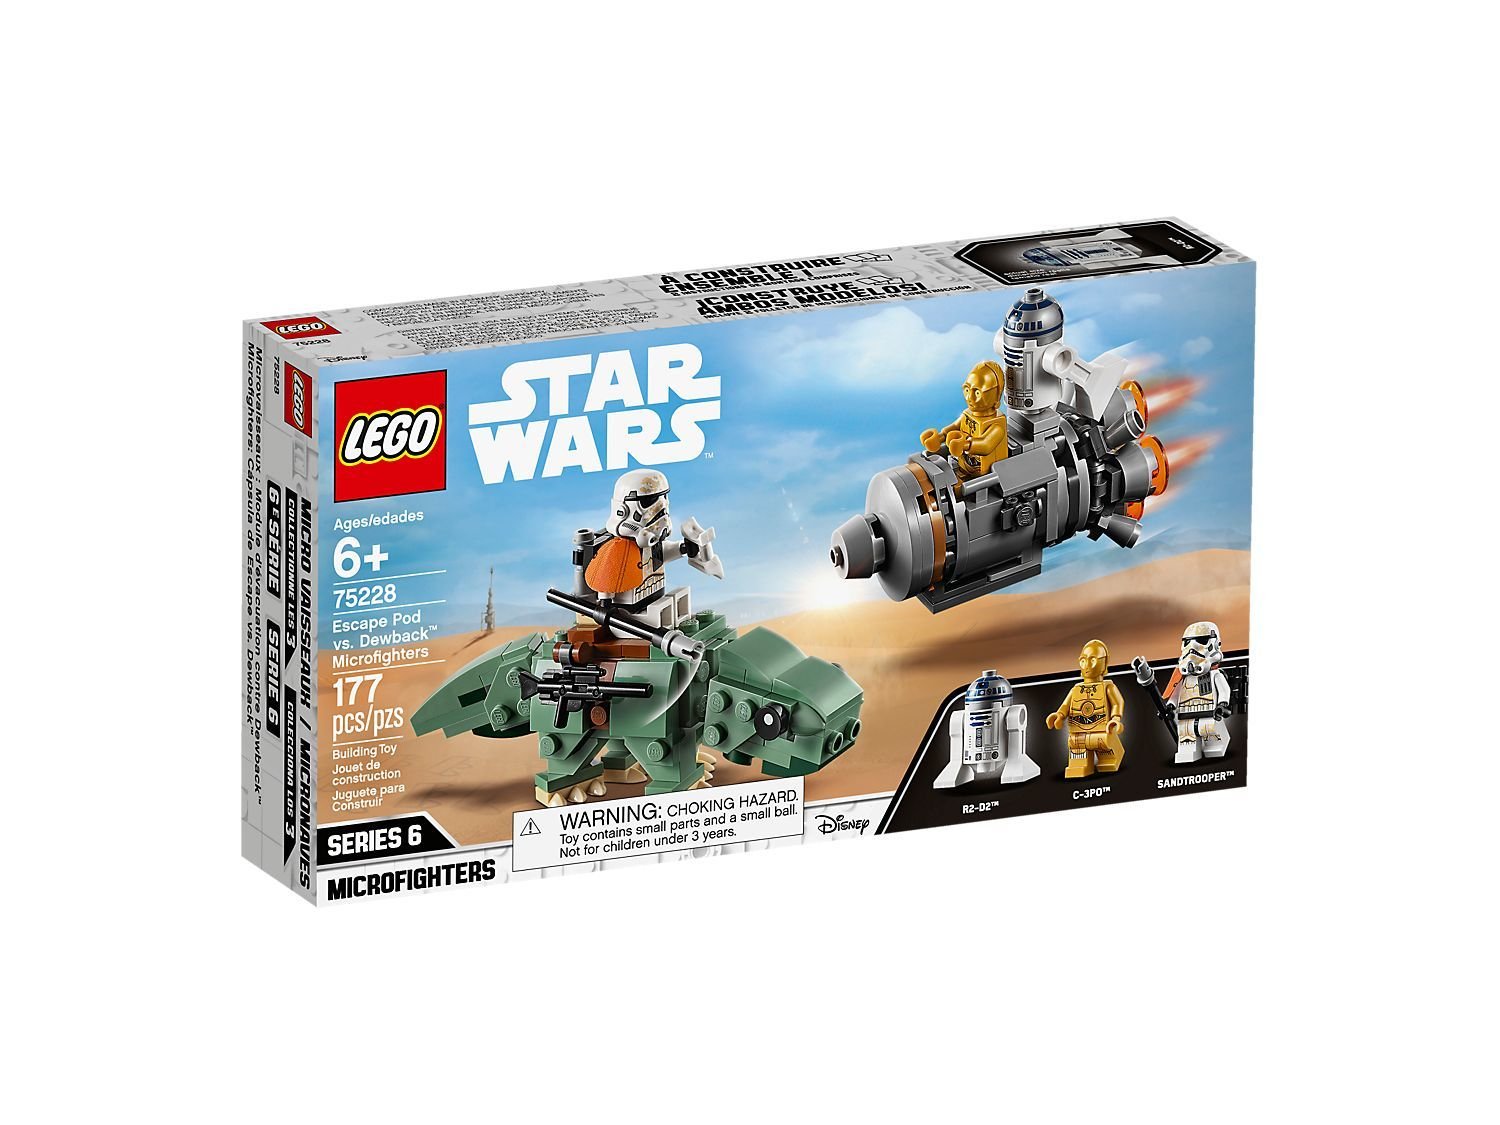  Конструктор LEGO Star Wars ТМ Escape Pod vs. Dewback ™ Microfighters (Мікроістребітель: рятувальна капсула проти росо фото1